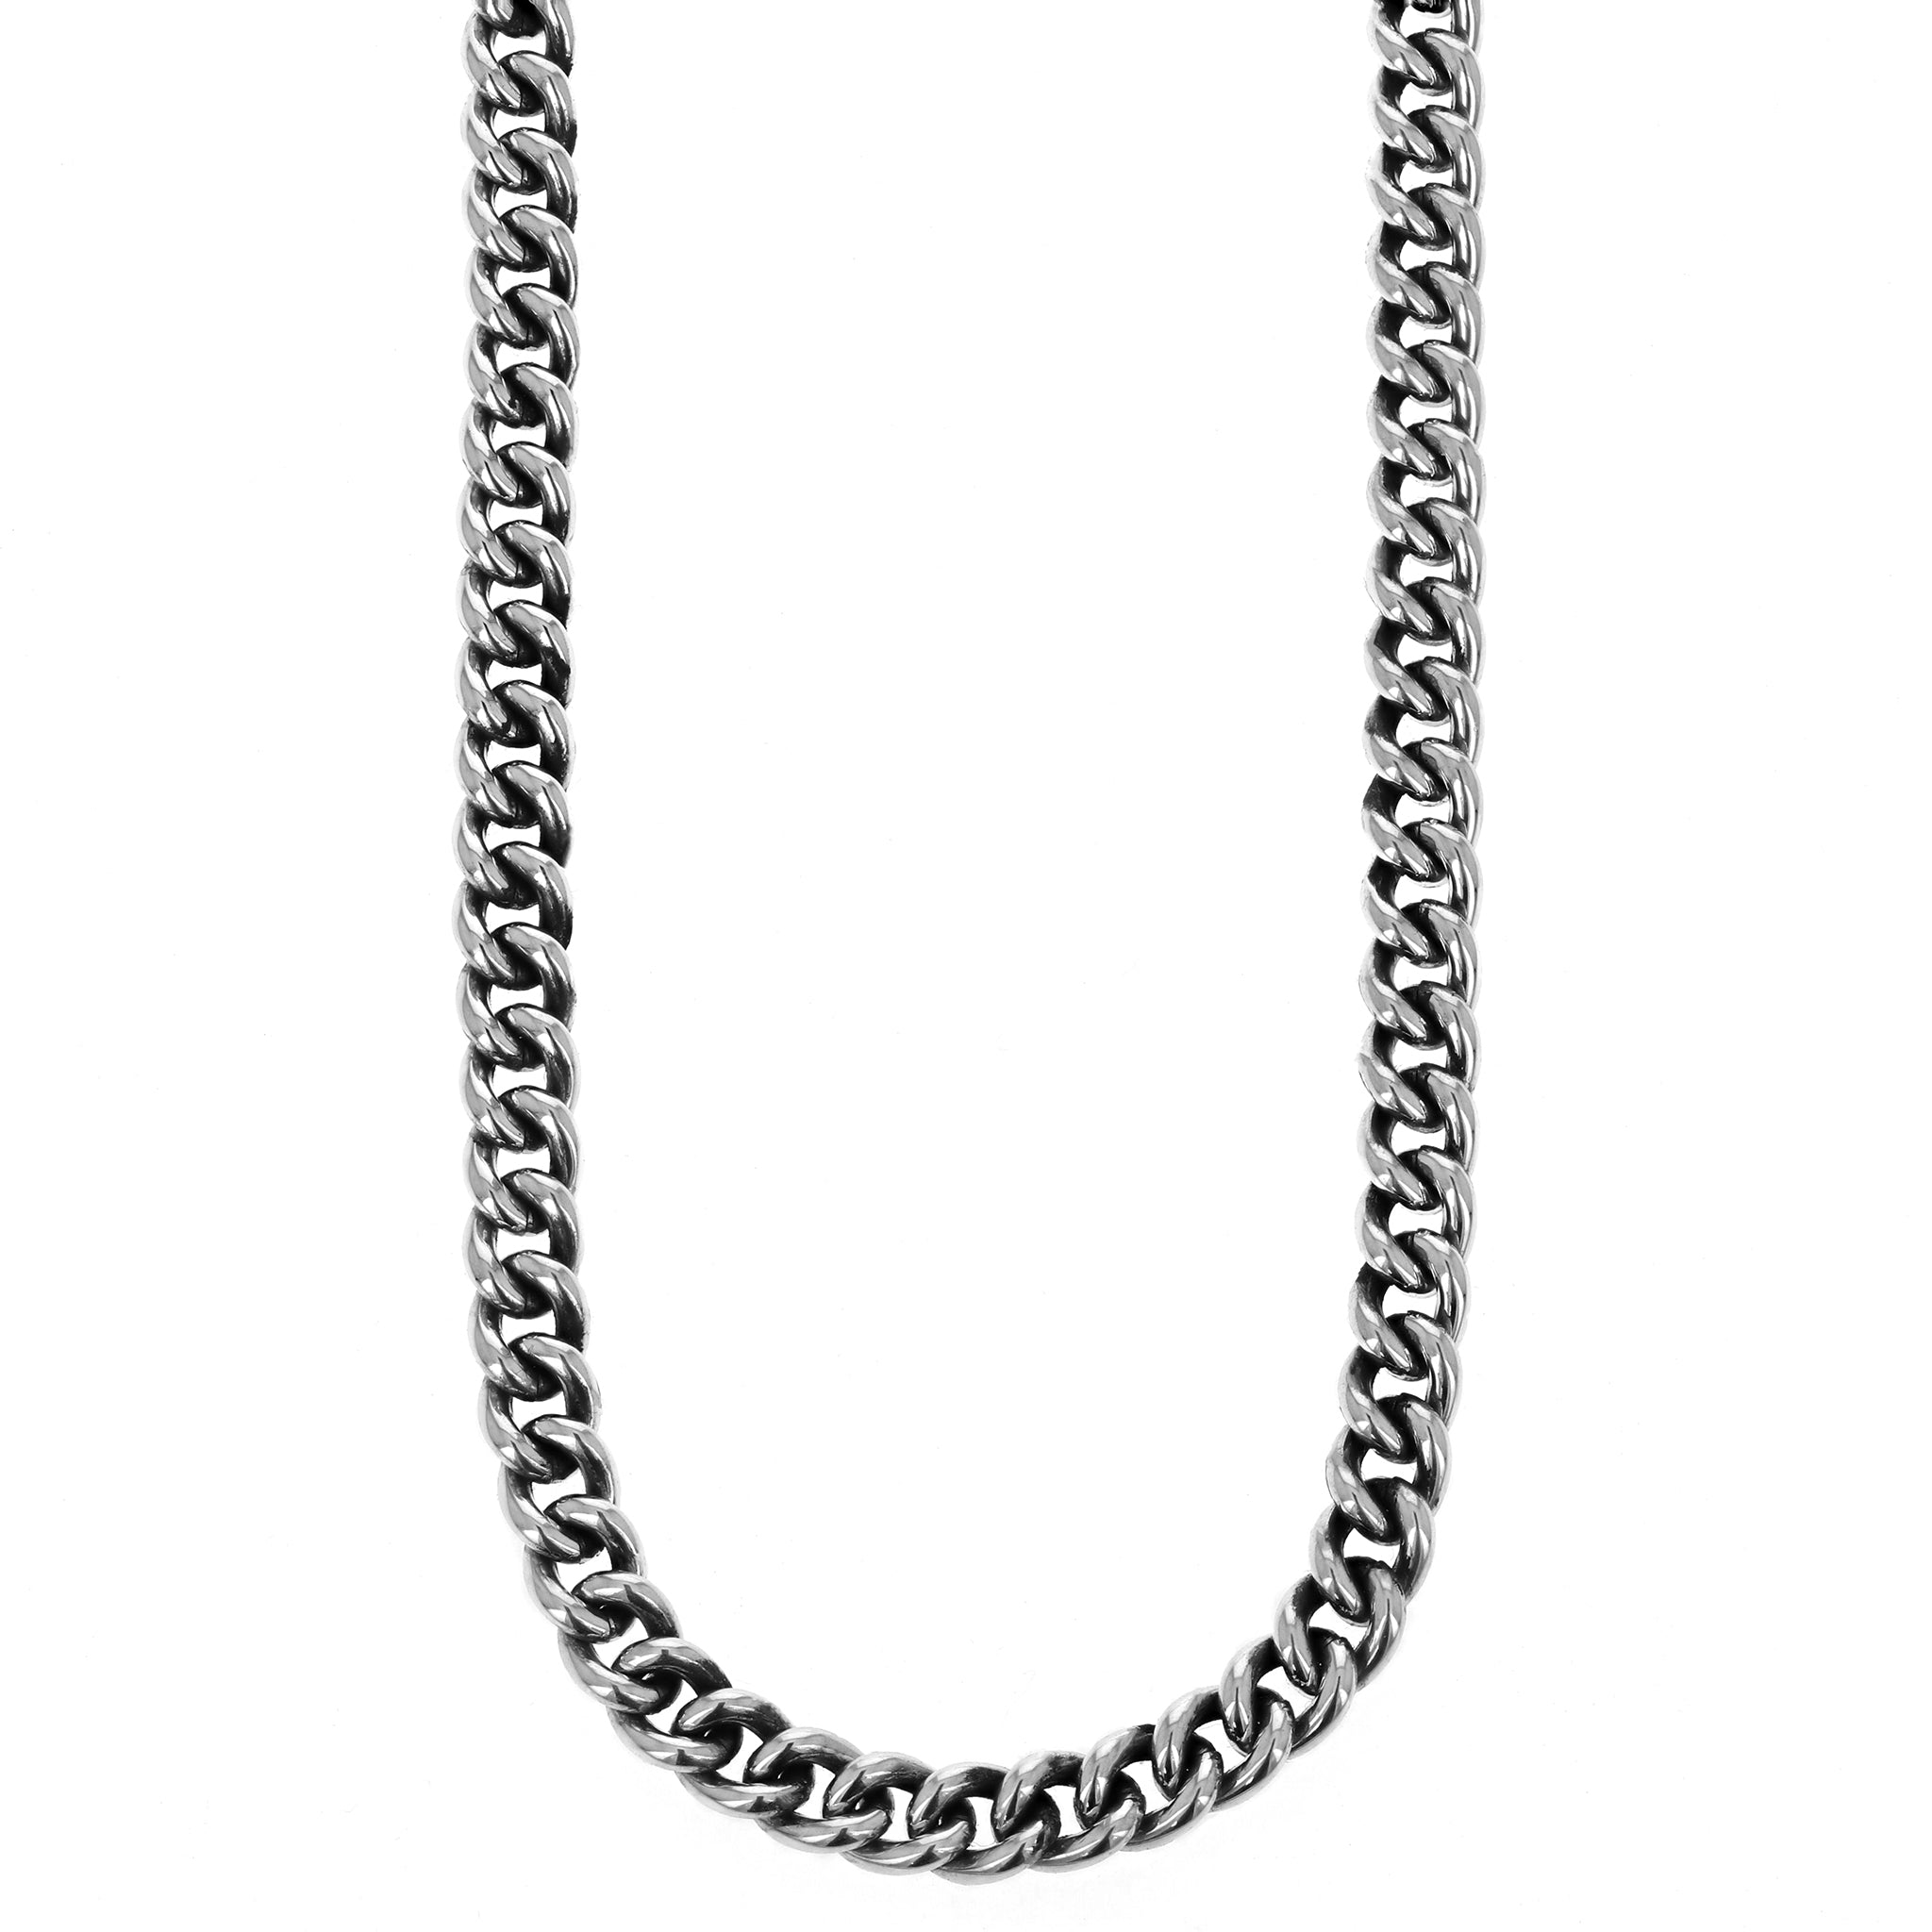 Mens Silver Chain Necklace 2mm Silver Chain Silver 